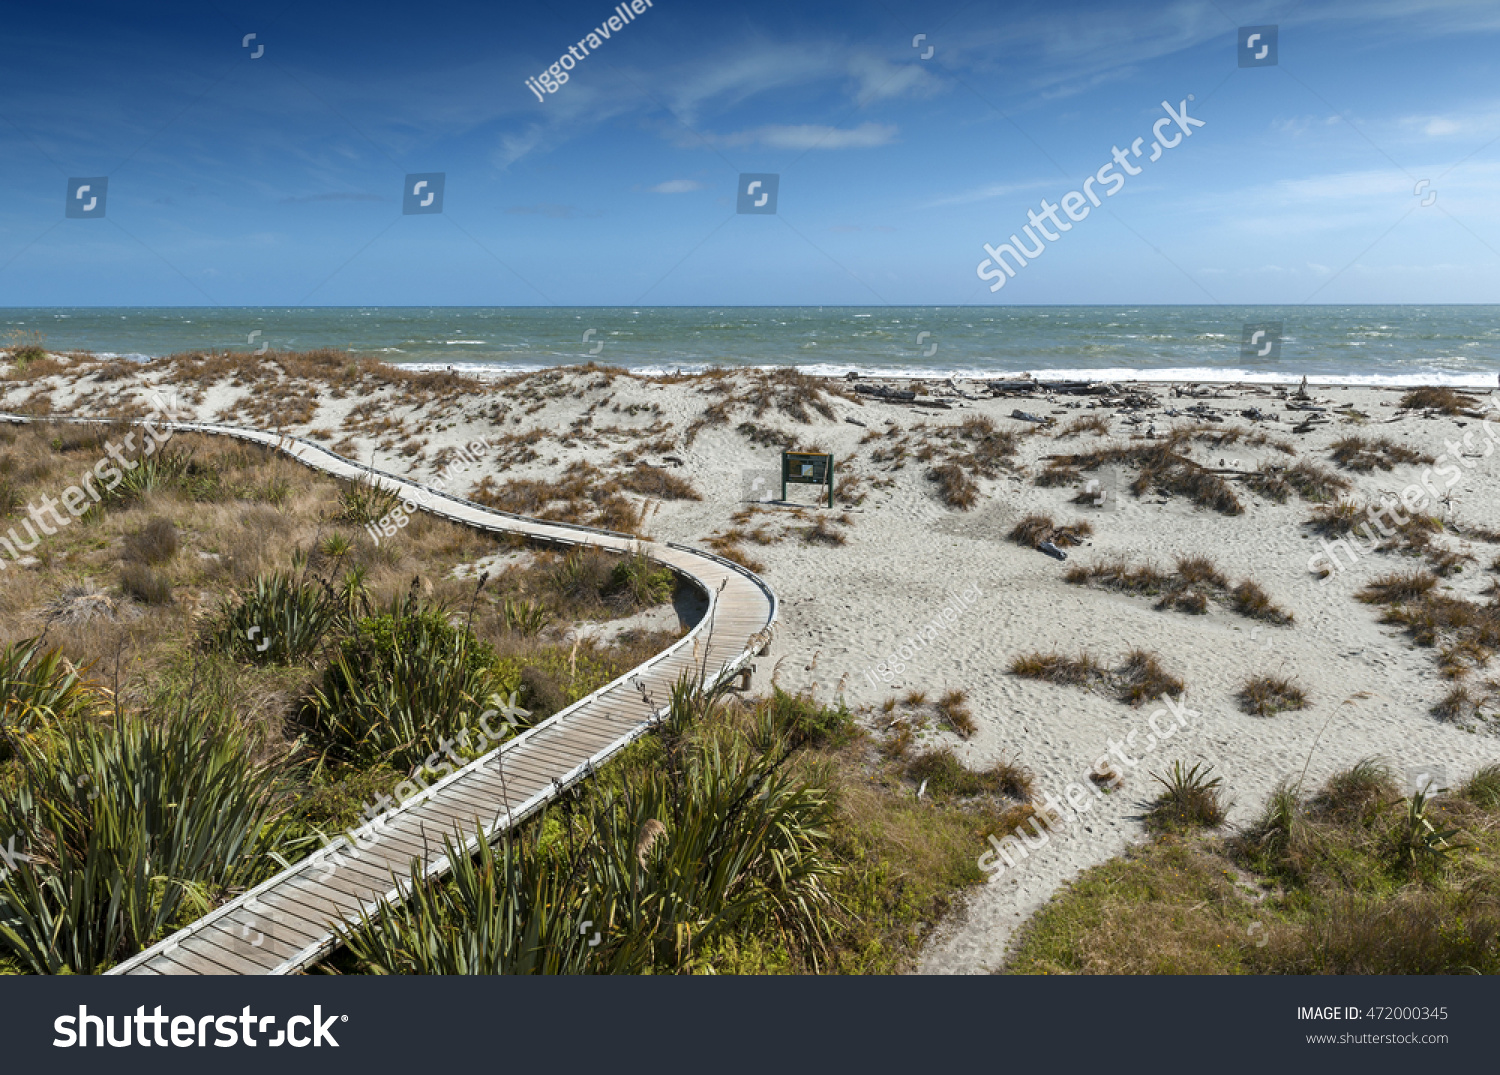 Wooden walkway by the beach at Tauparikaka Marine Reserve, Haast, New Zealand #472000345